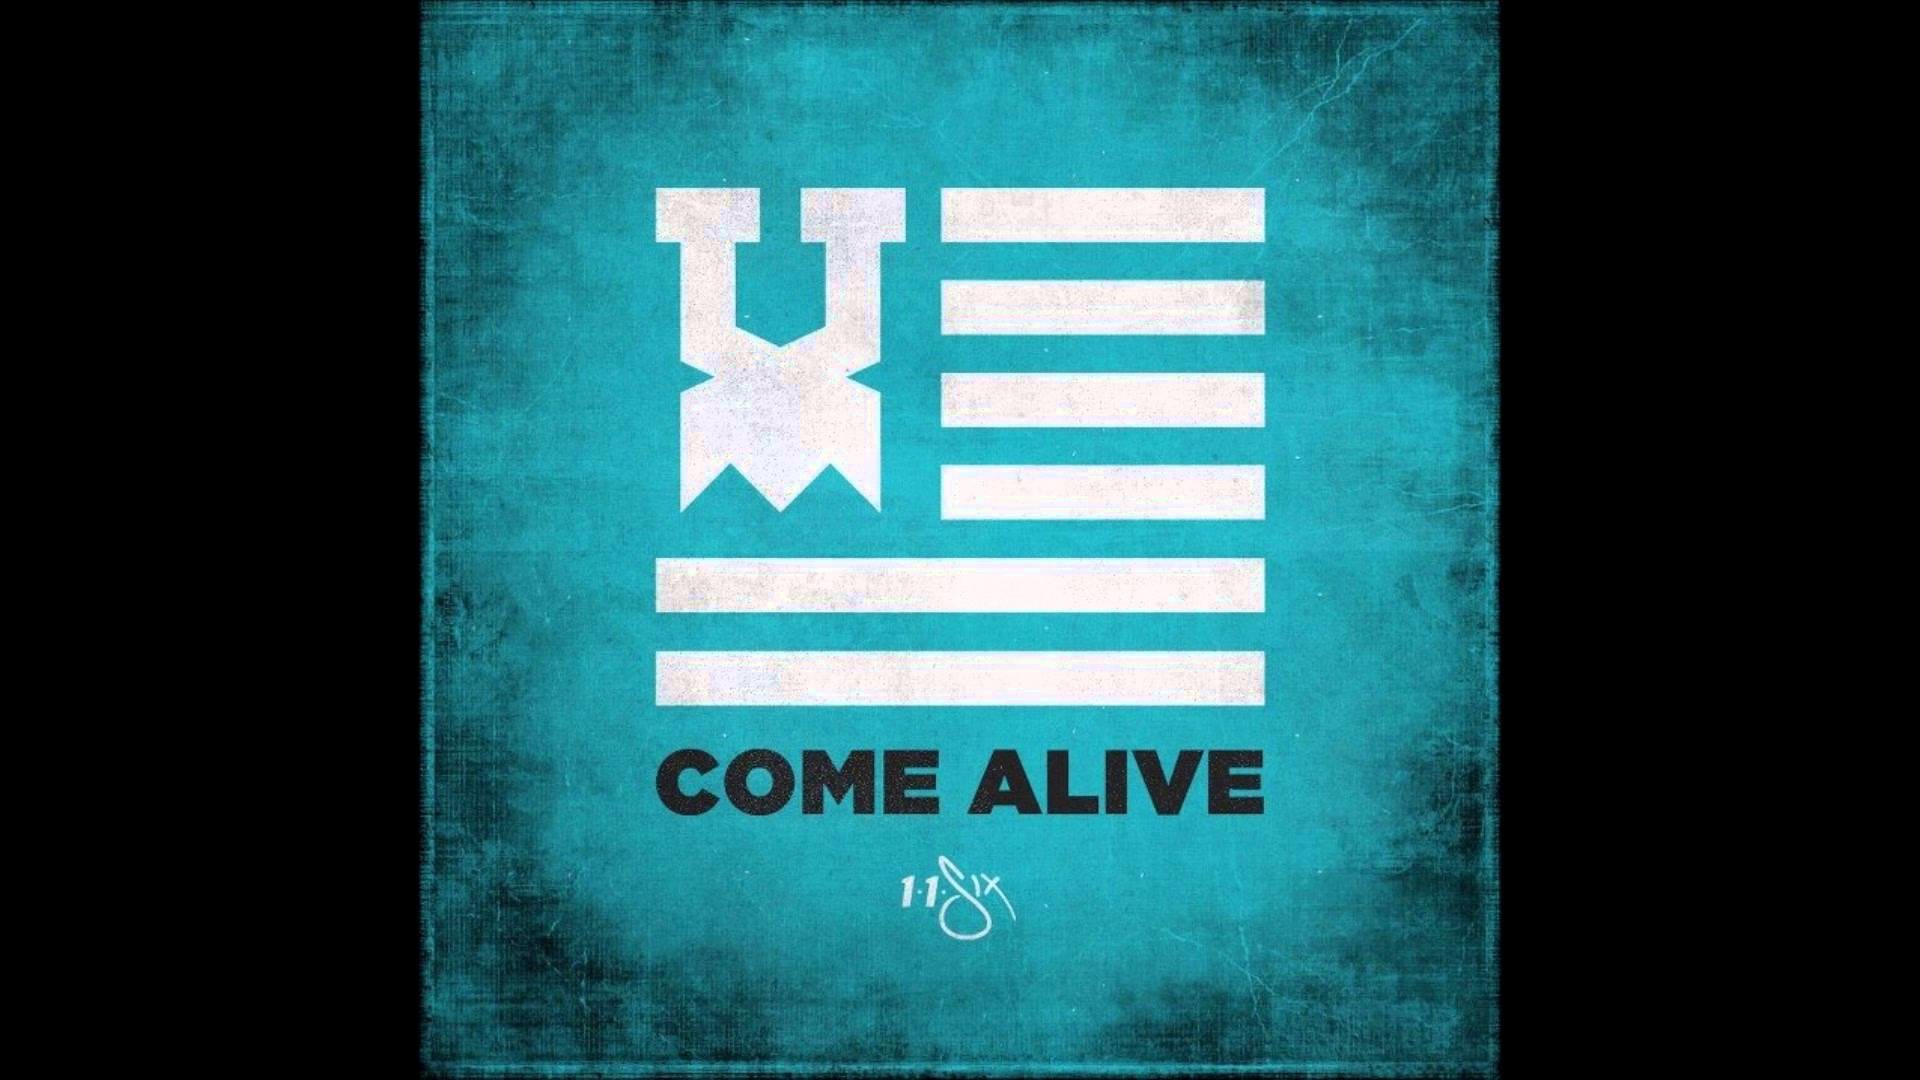 116 – Come Alive (feat. KB, Tedashii, Derek Minor, Andy Mineo, Lecrae &  Trip Lee)